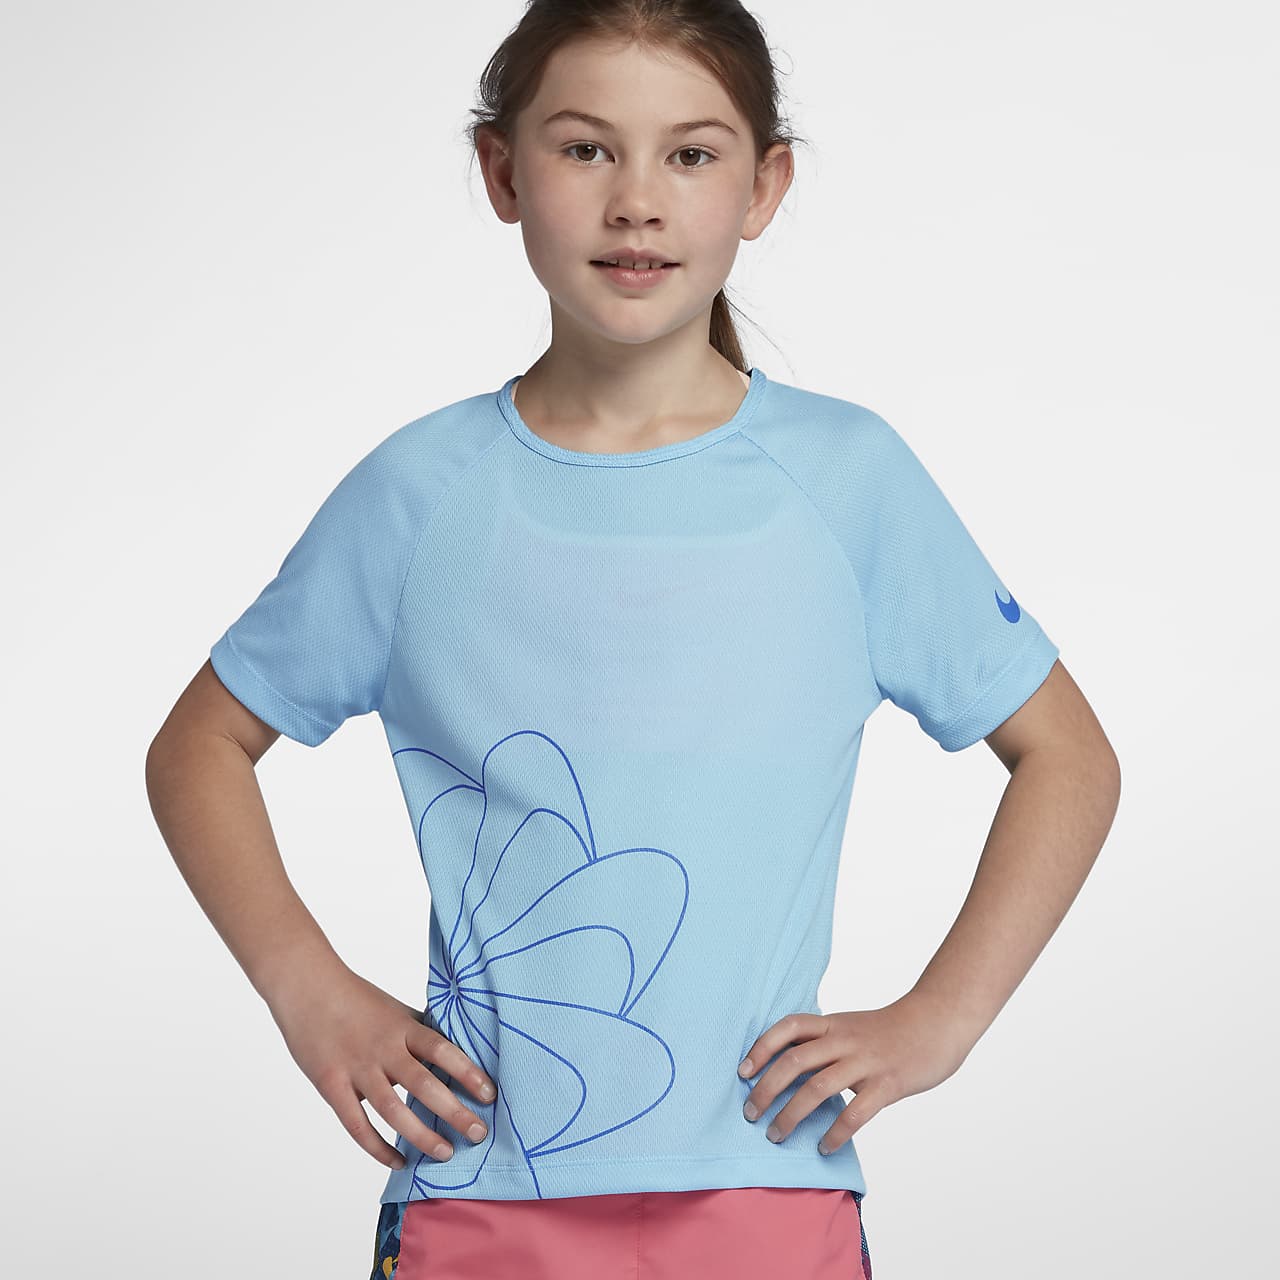 Nike Older Kids' (Girls') Short-Sleeve Graphic Running Top